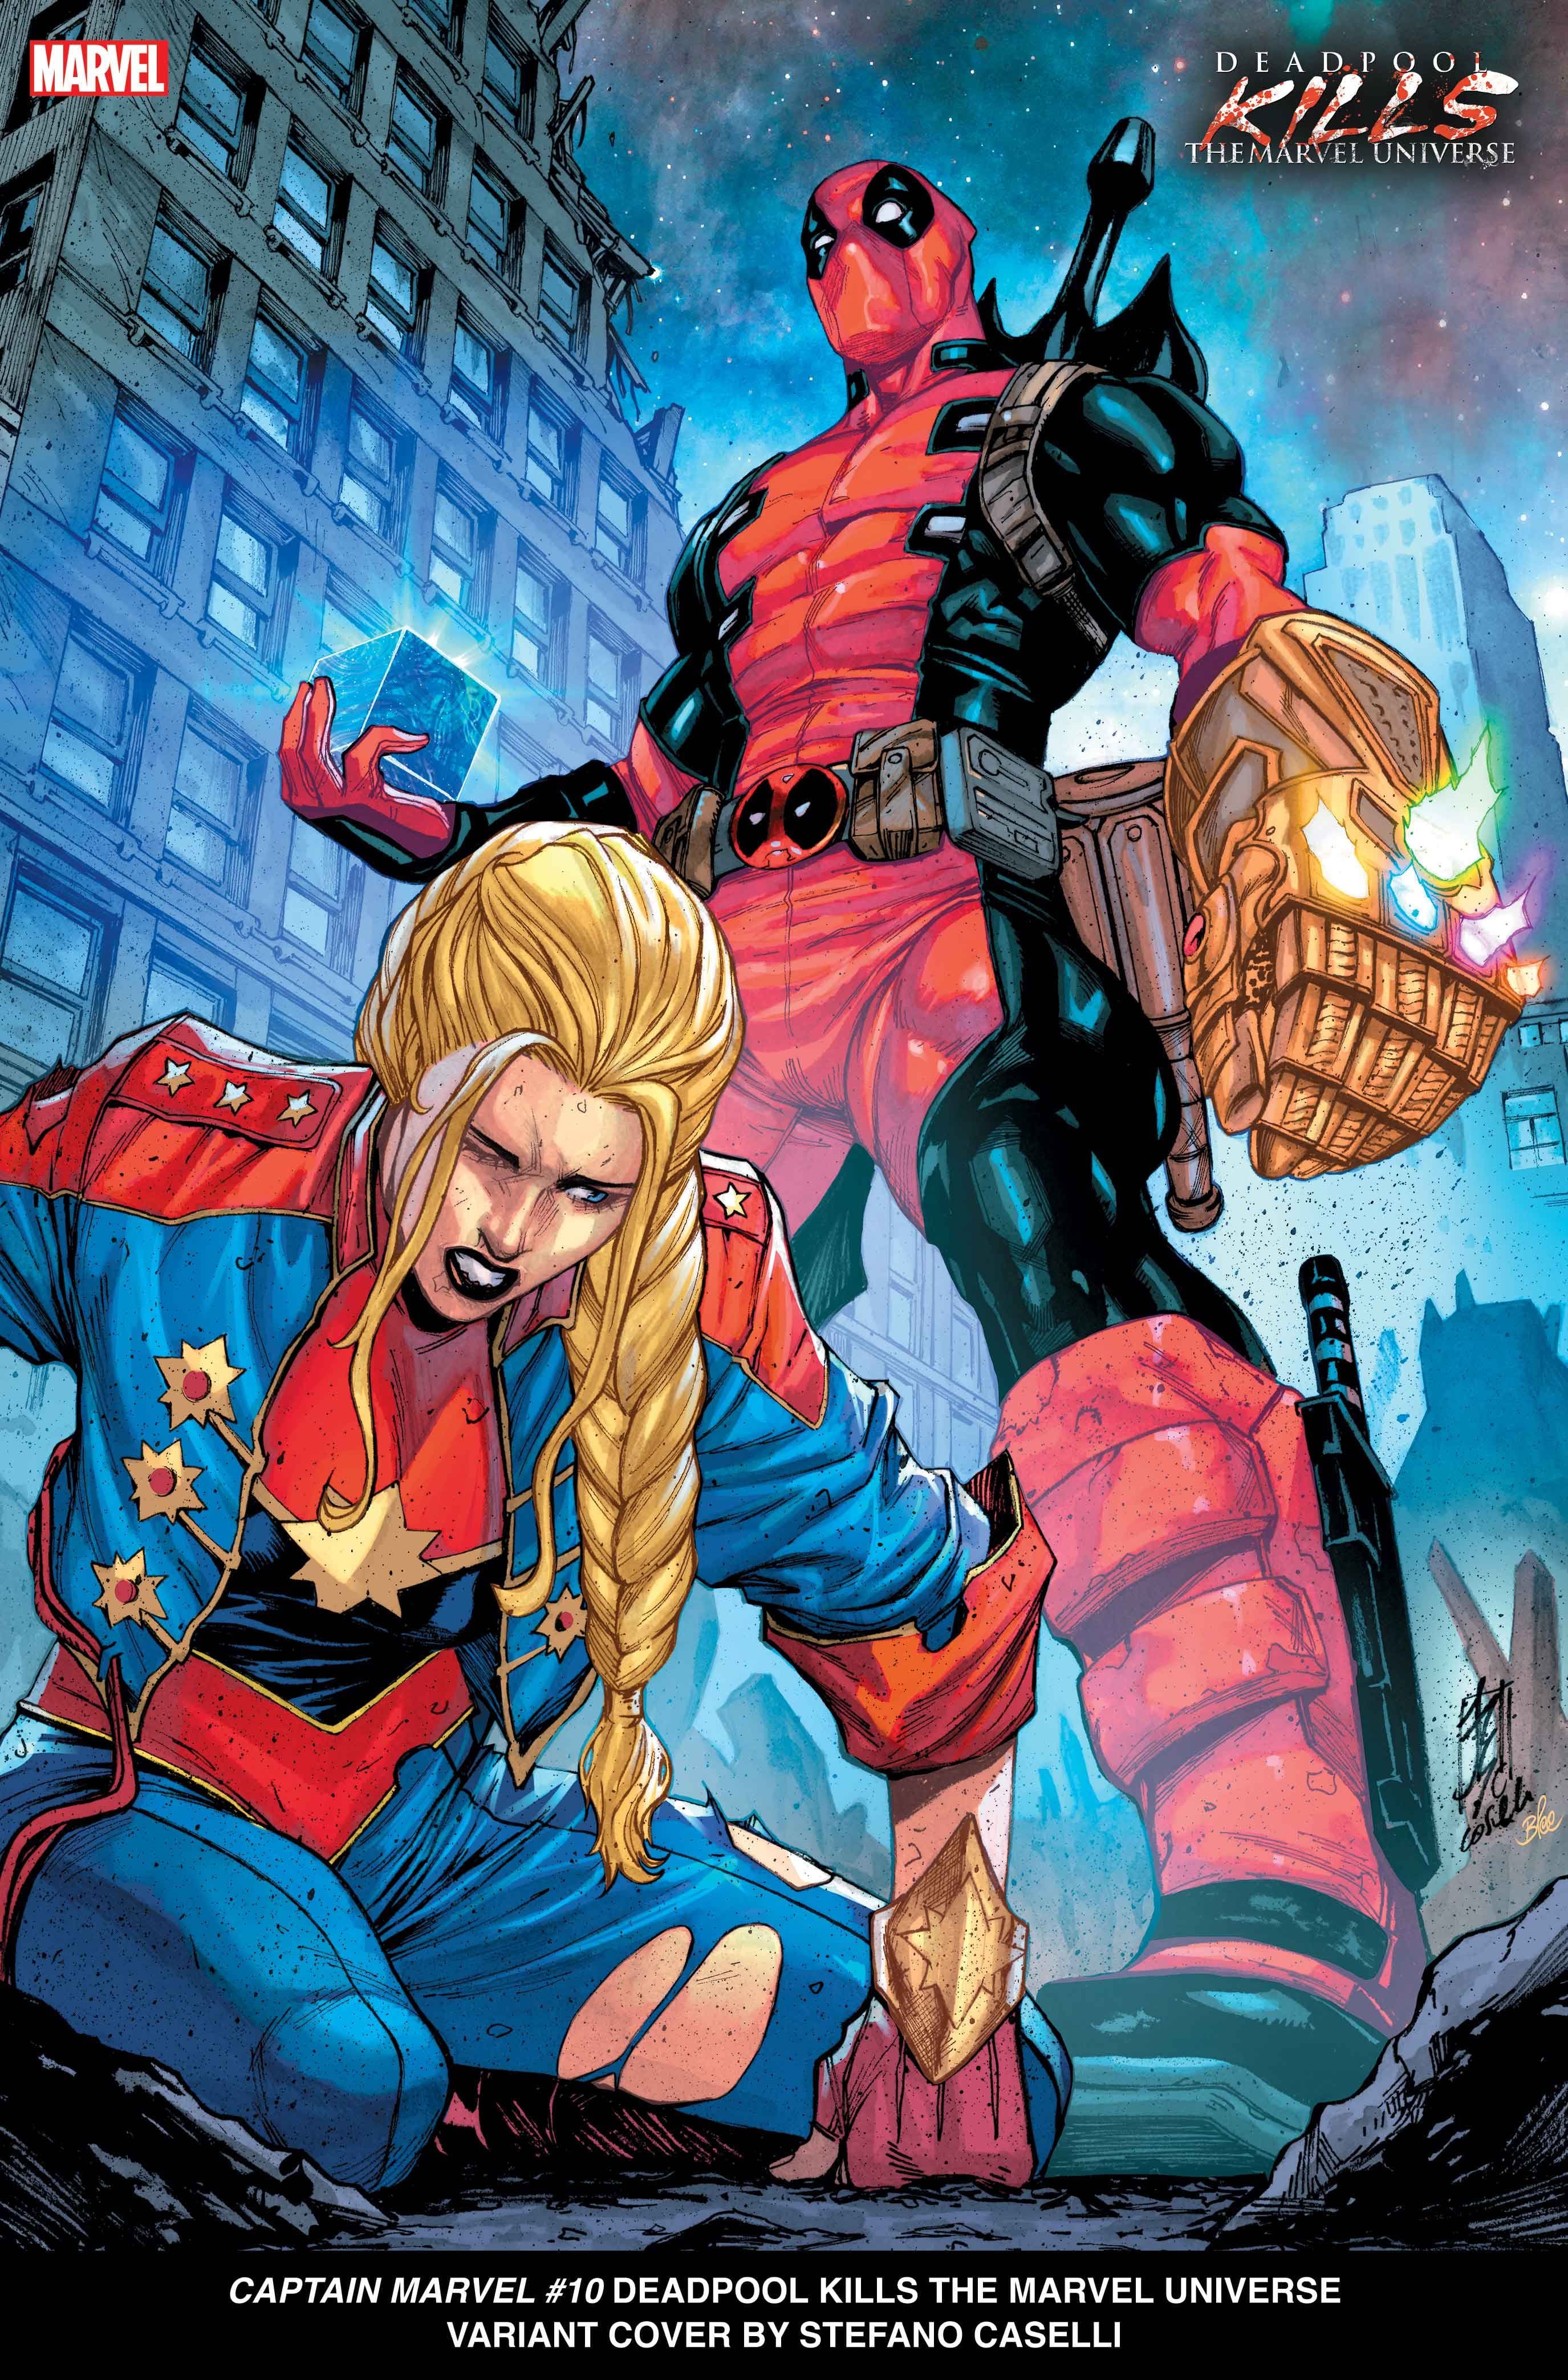 CAPTAIN MARVEL #10 Deadpool Kills the Marvel Universe Variant Cover by Stefano Caselli